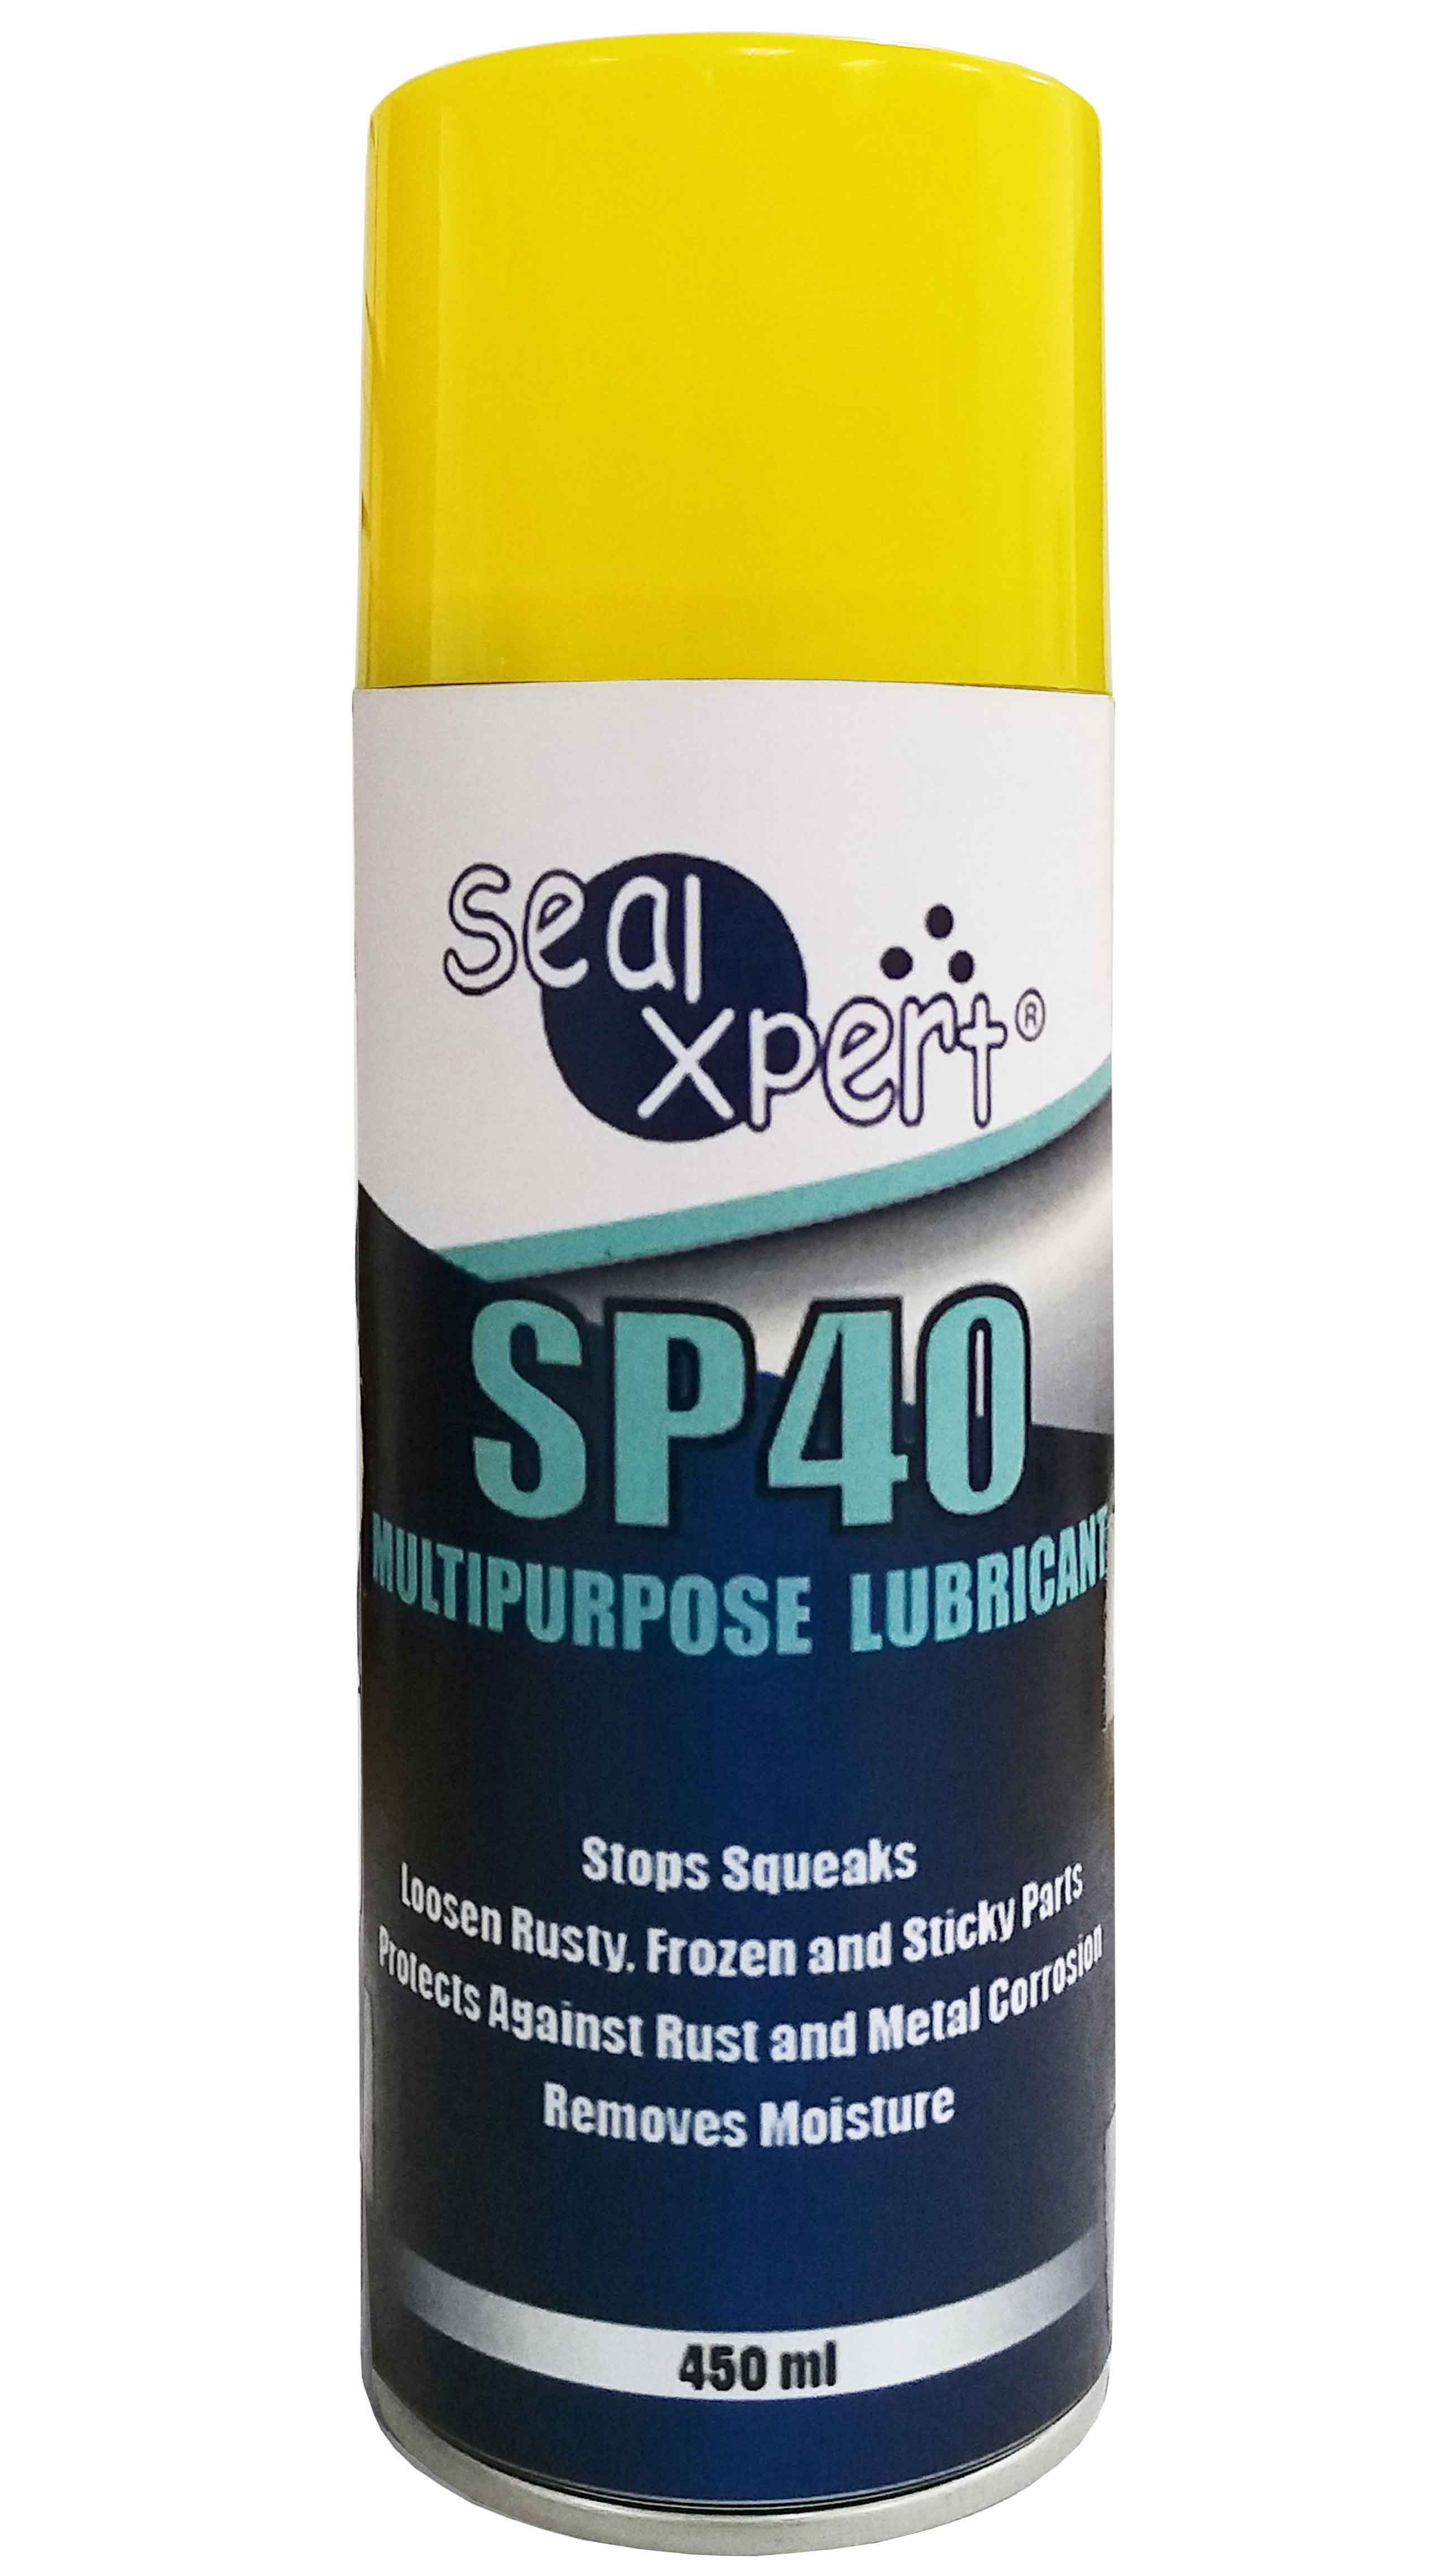 5903 SP40 Multipurpose Lubricant - AEROSOL PRODUCTS (ID)